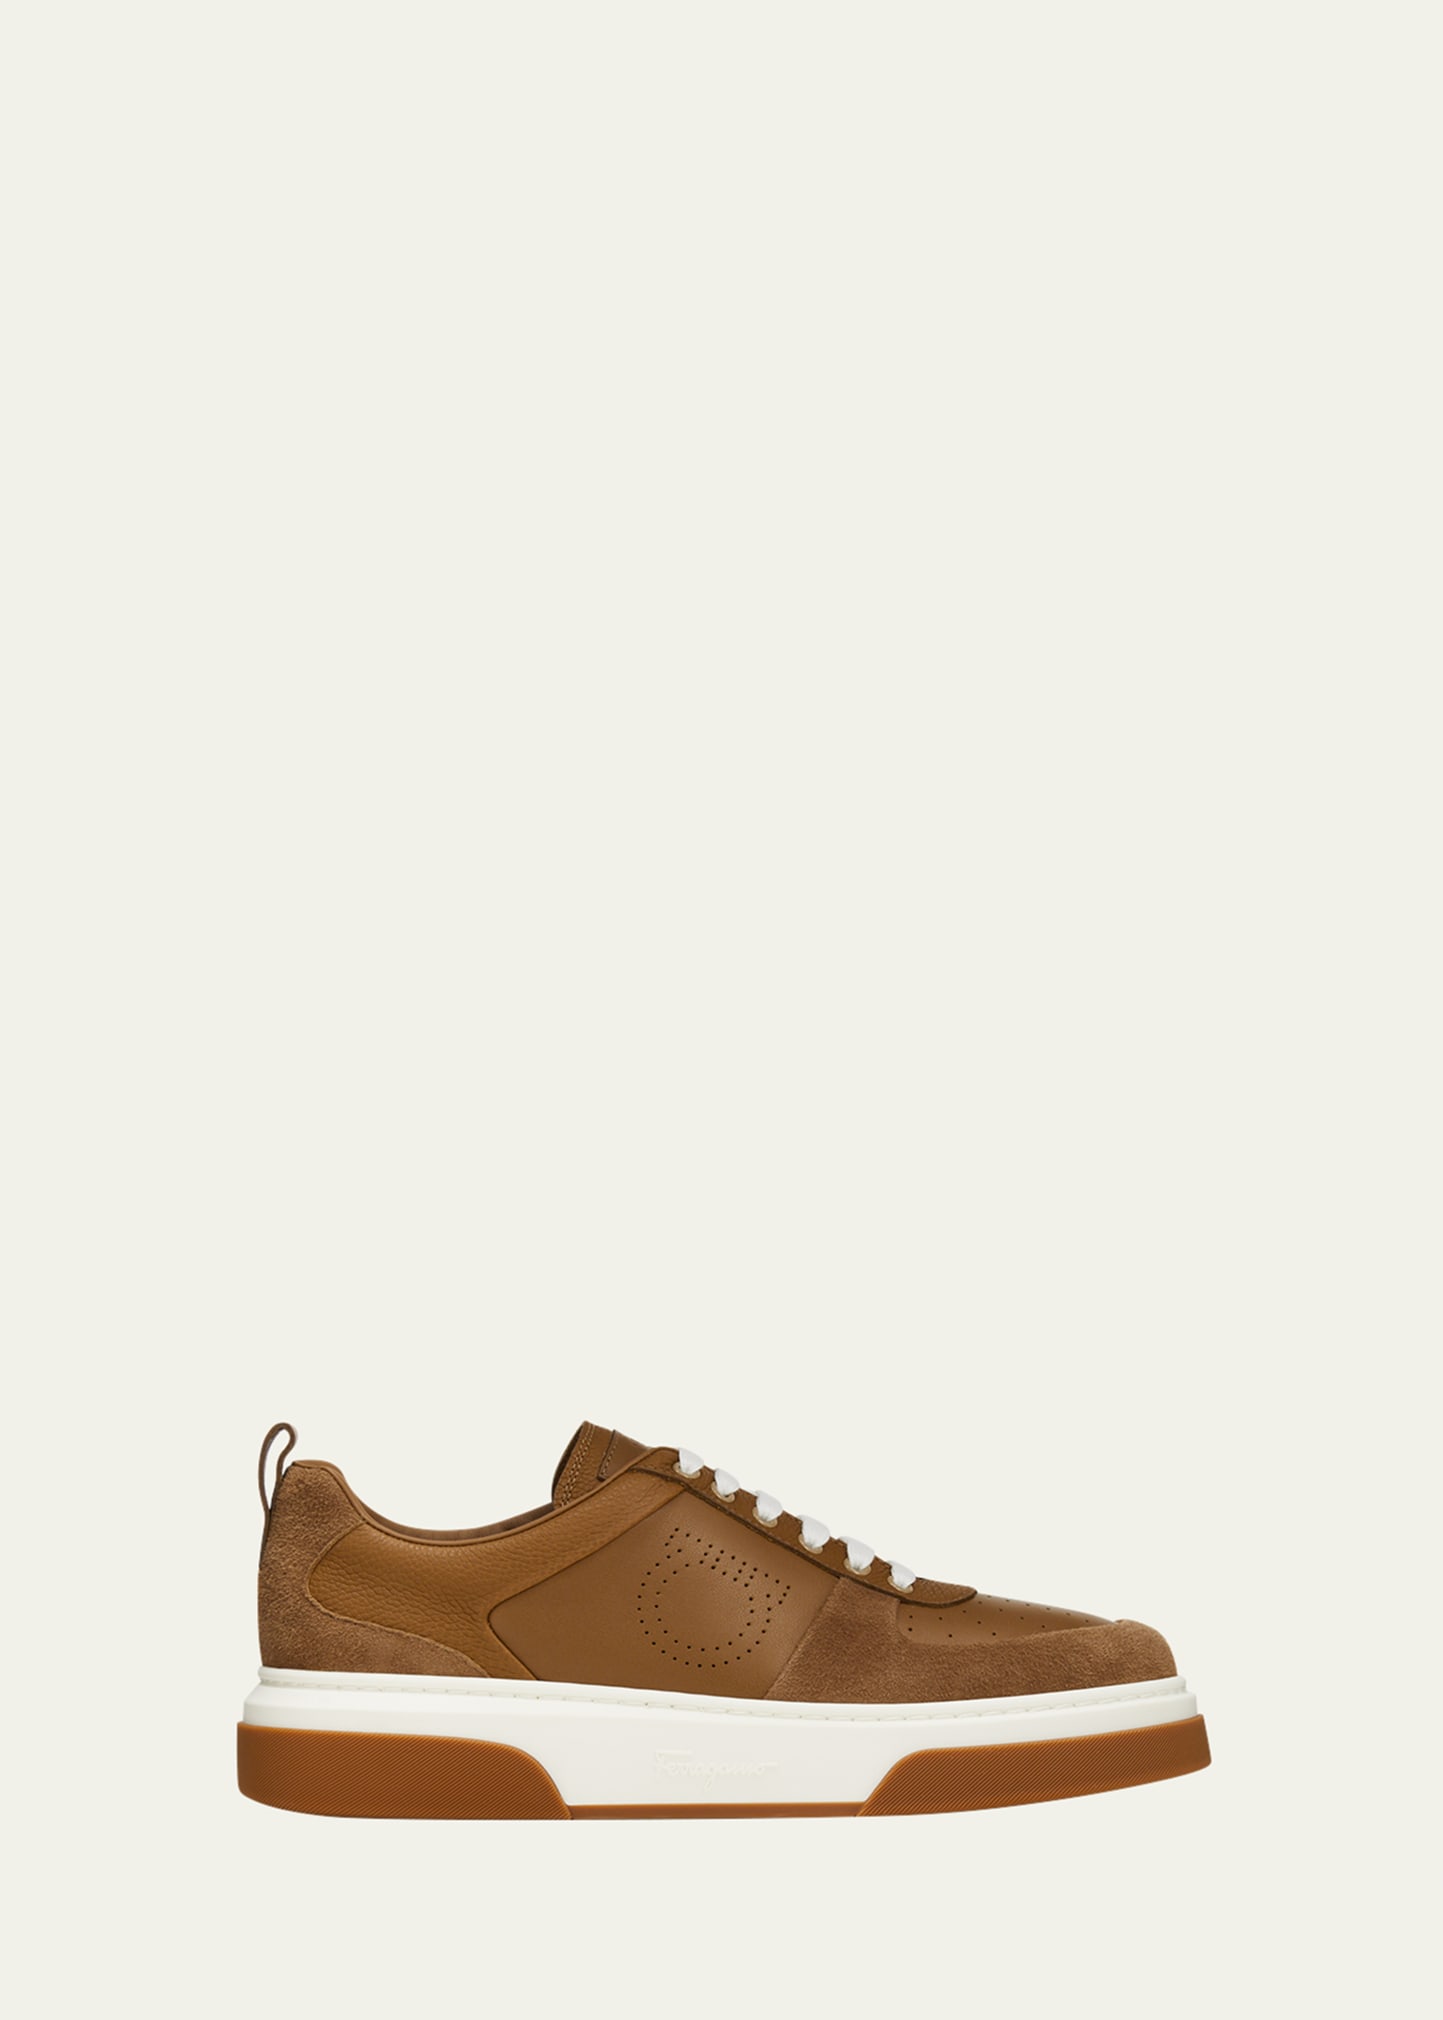 Salvatore Ferragamo Men's Cassina Gancio Leather and Suede Sneakers